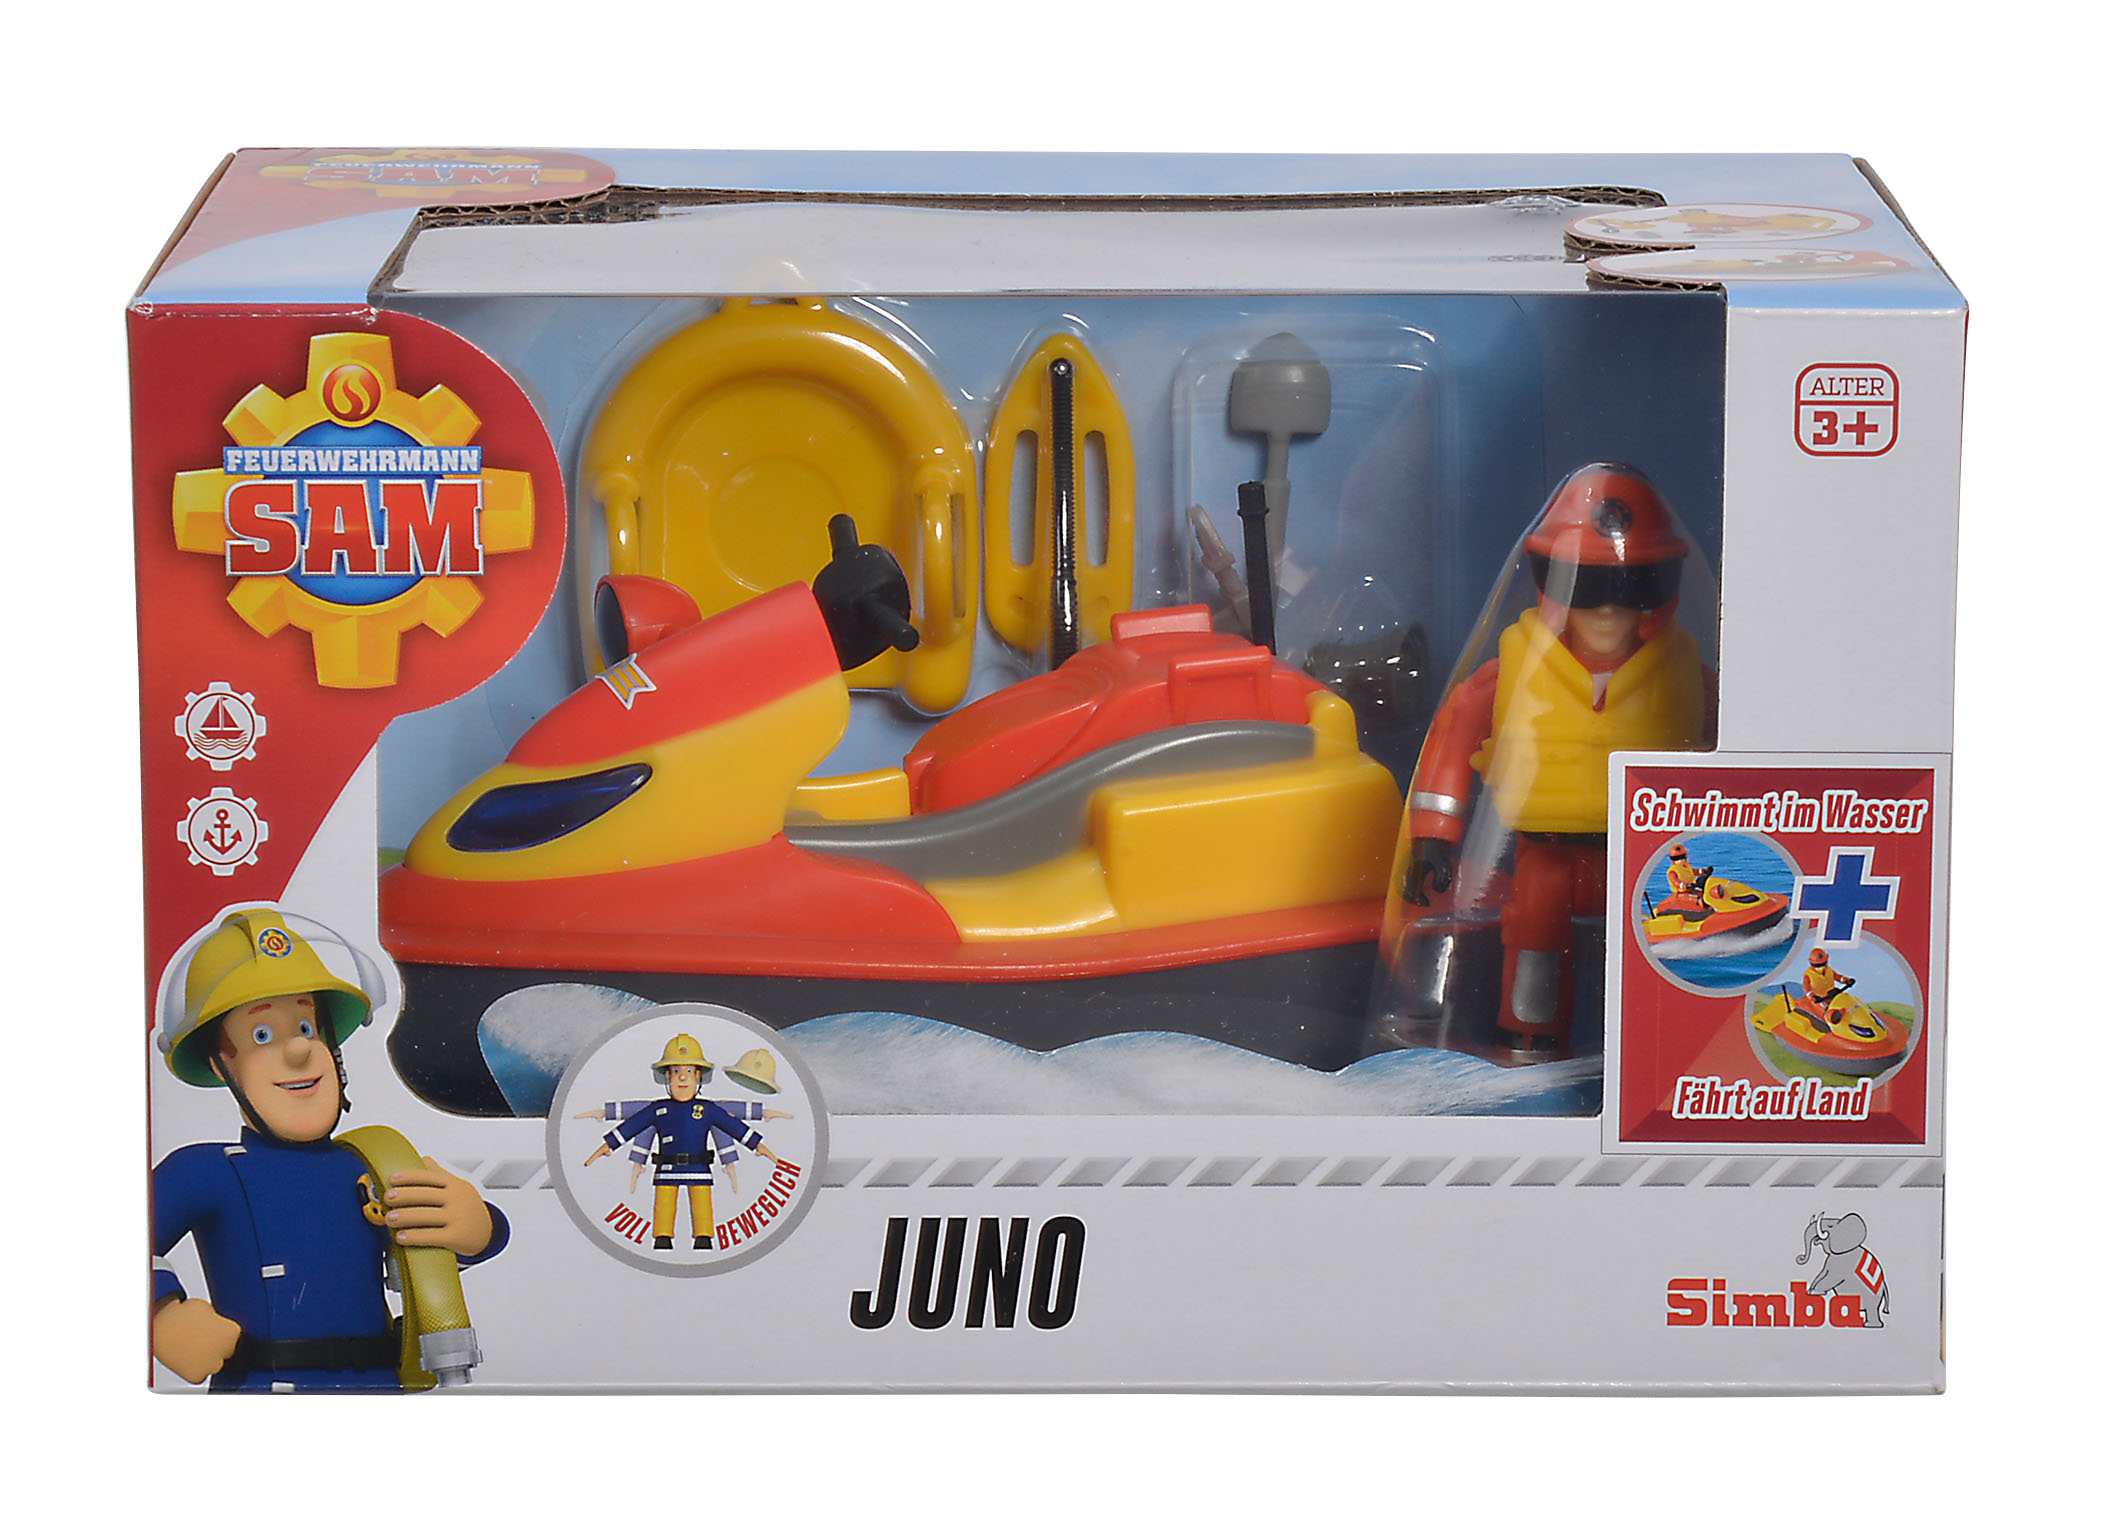 Juno Jet Feuerwehrmann TOYS JetSki SIMBA Spielzeug Sam Mehrfarbig Ski